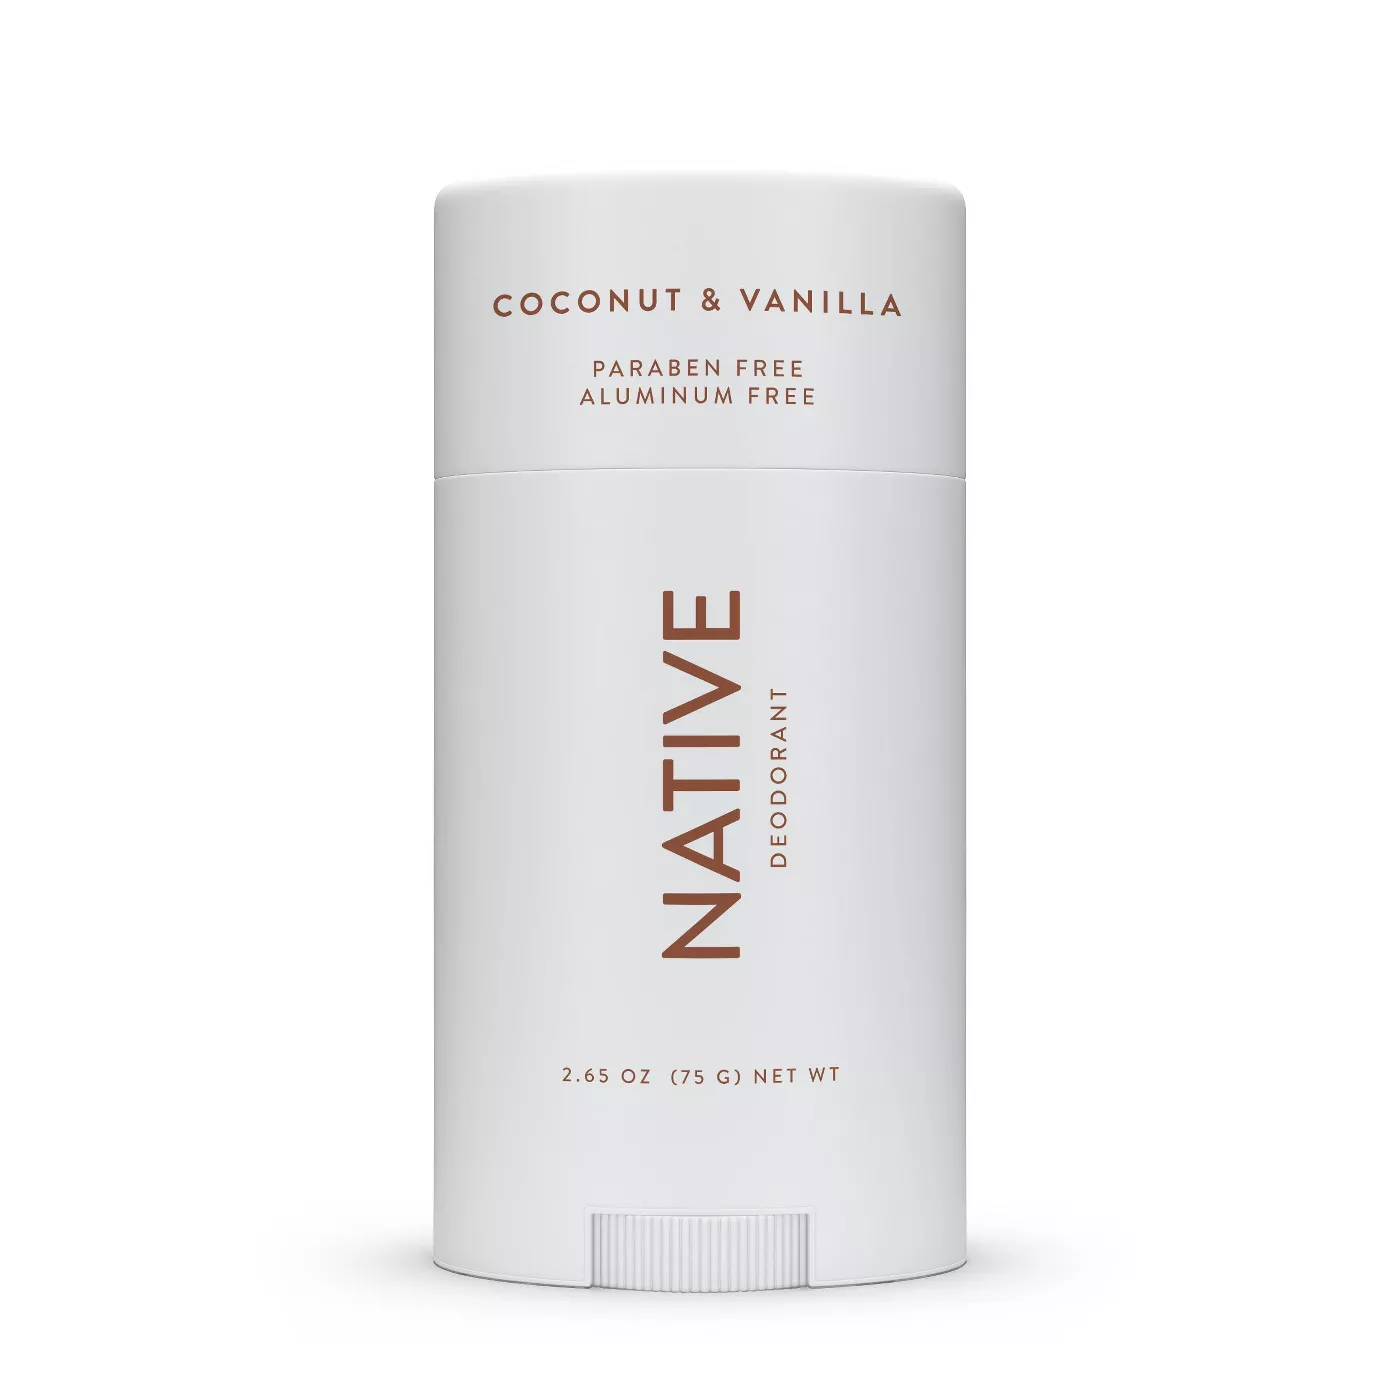 Native Coconut & Vanilla Deodorant - 2.65oz - image 1 of 12